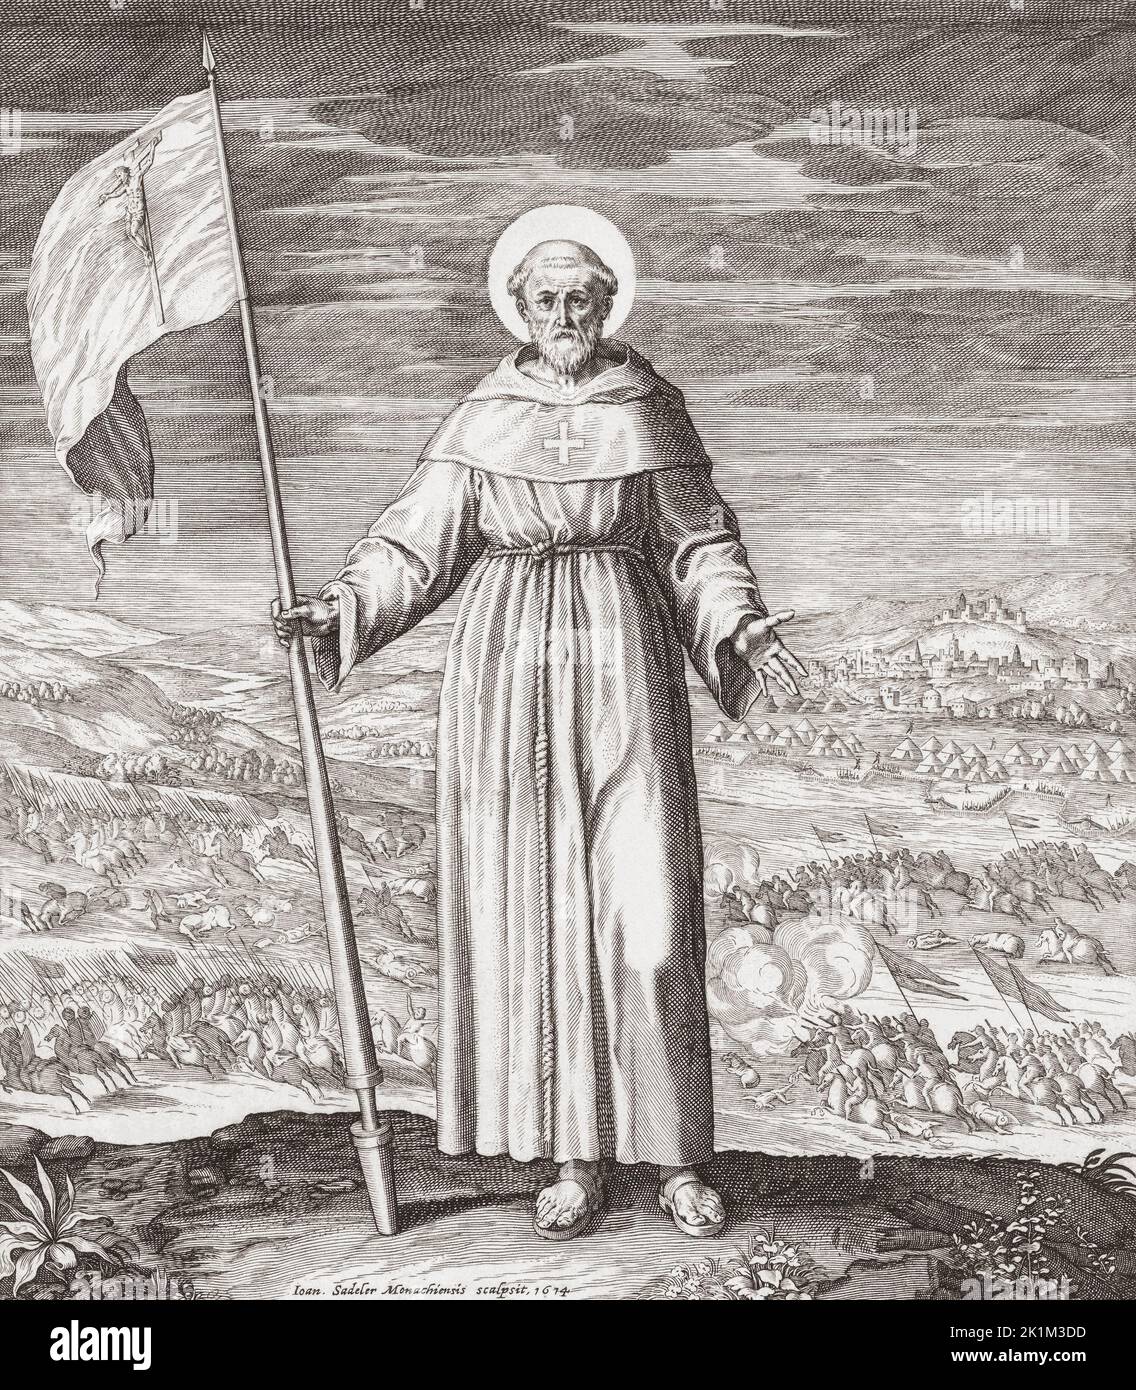 Saint John of Capistrano (Italian: Giovanni da Capistrano), 1386 – 1456. Italian Franciscan priest.  After a 17th century print by Johannes Sadeler. Stock Photo